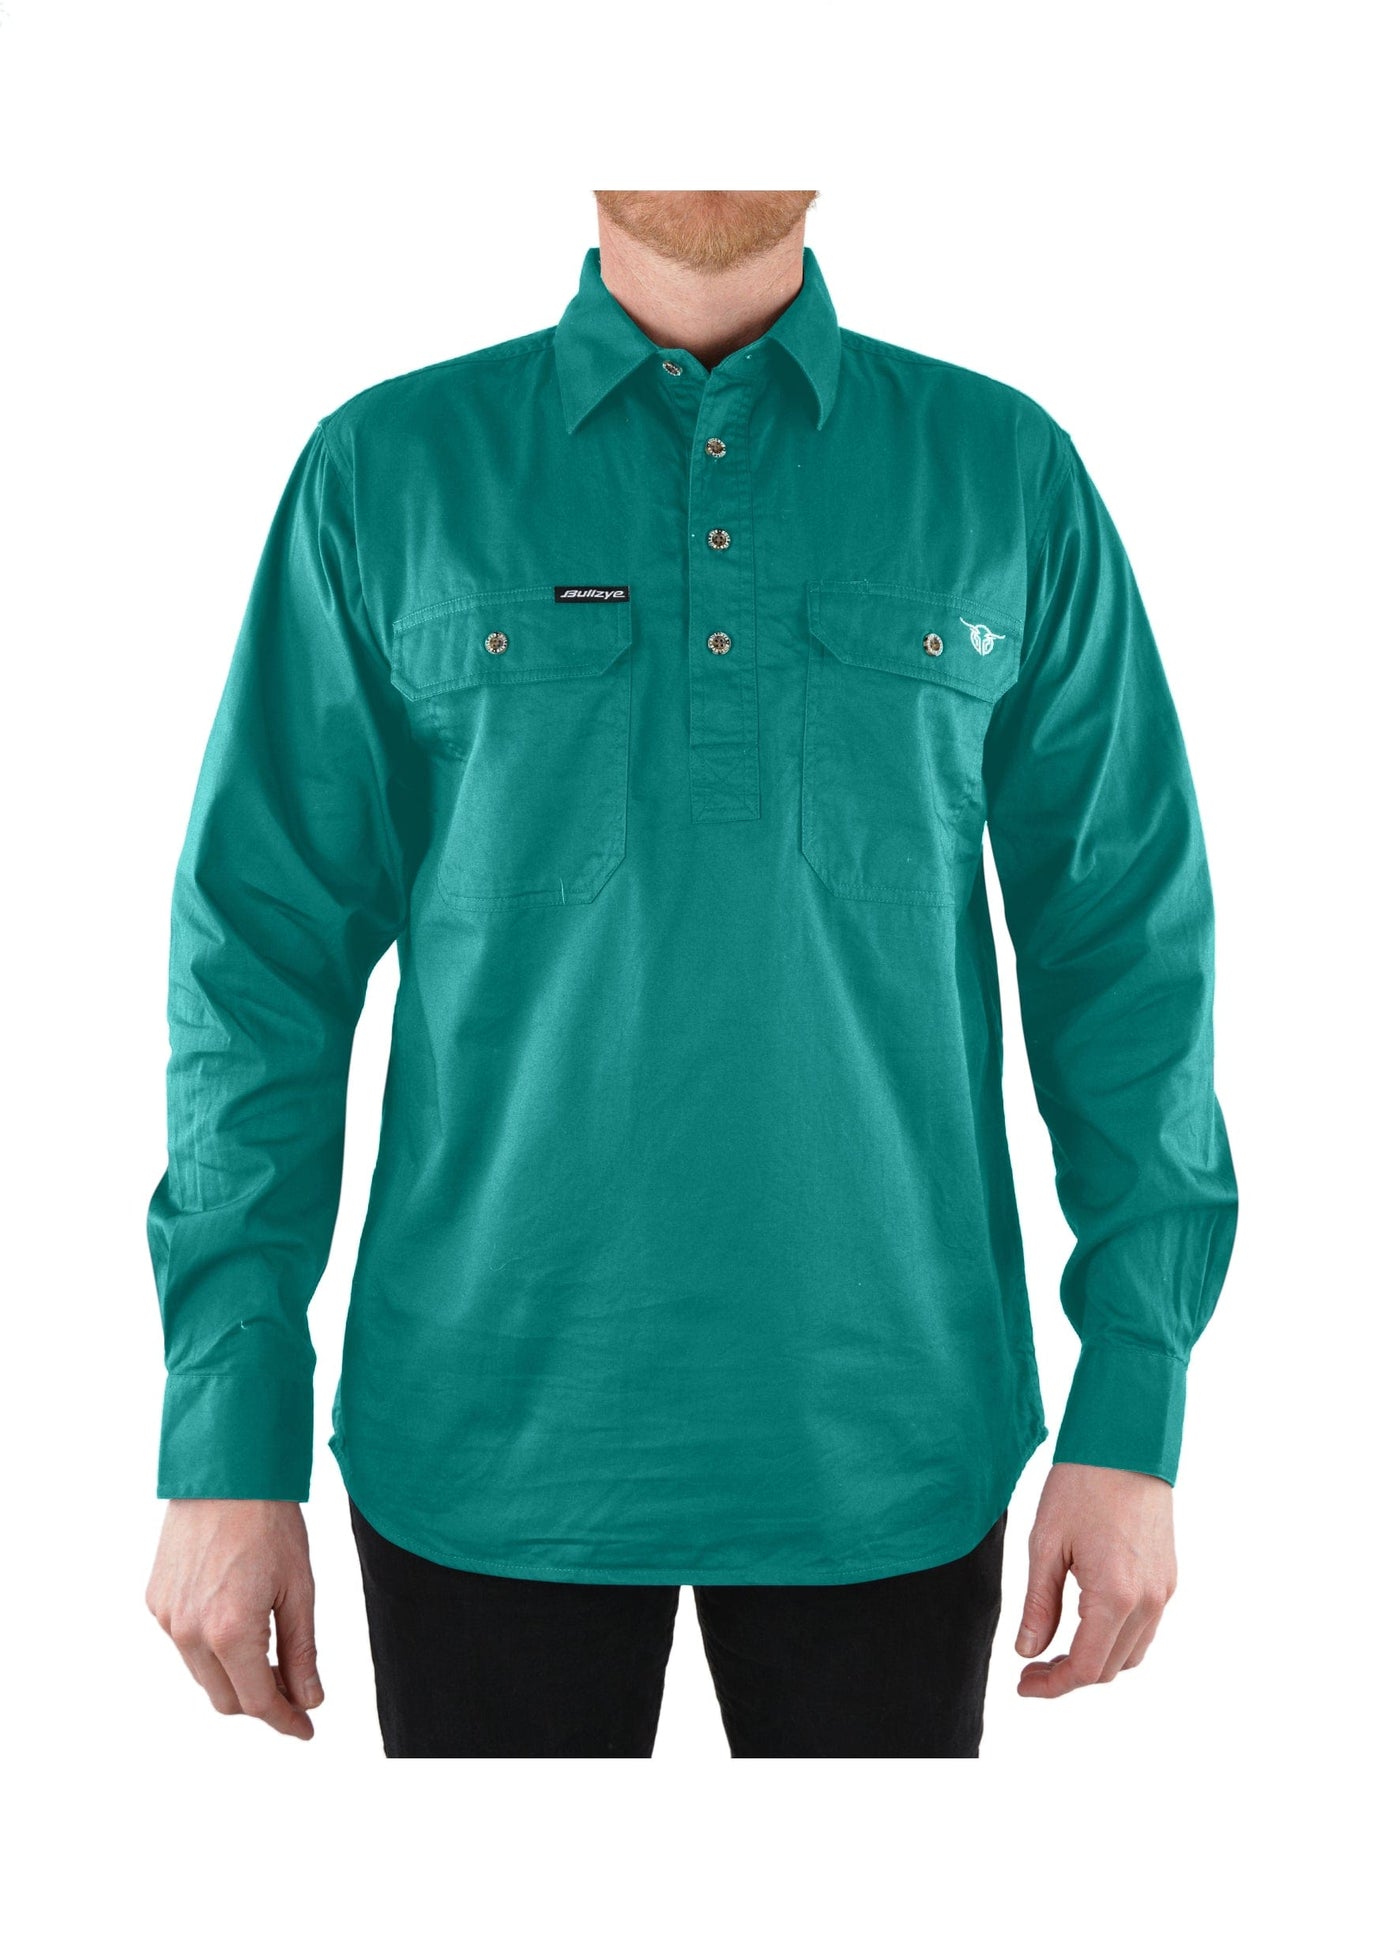 BULLZYE WORK SHIRTS B1S1101120 Mens Half Placket Work Shirt | Green